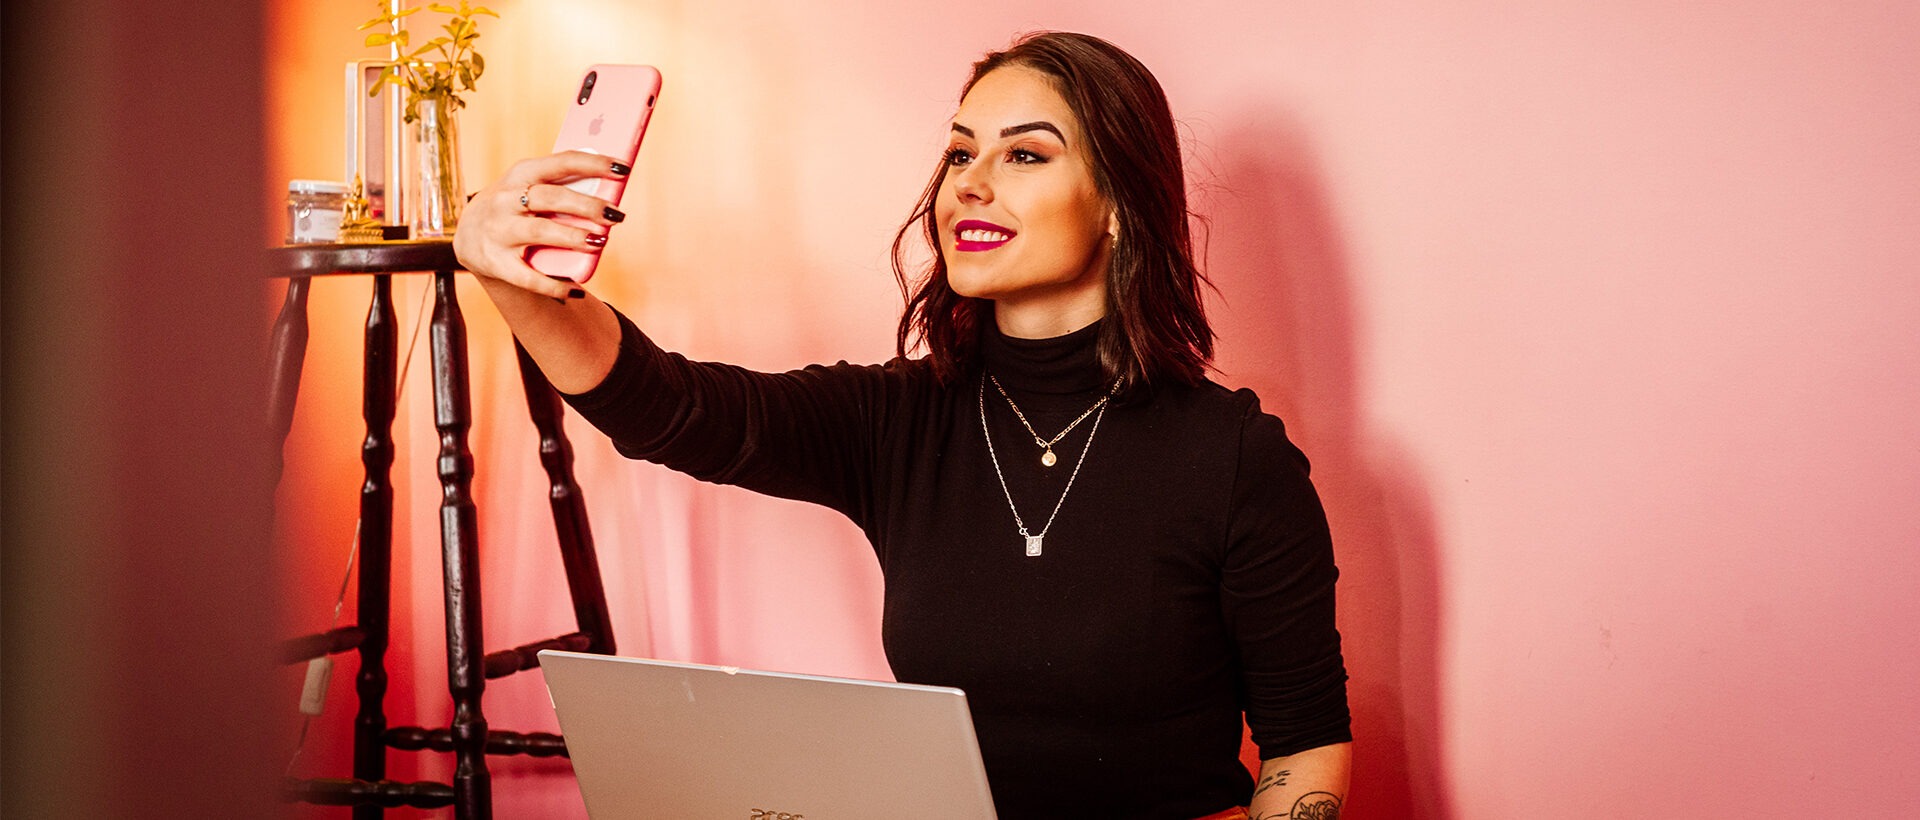 Influencer fotografier sich selbst - Selfie